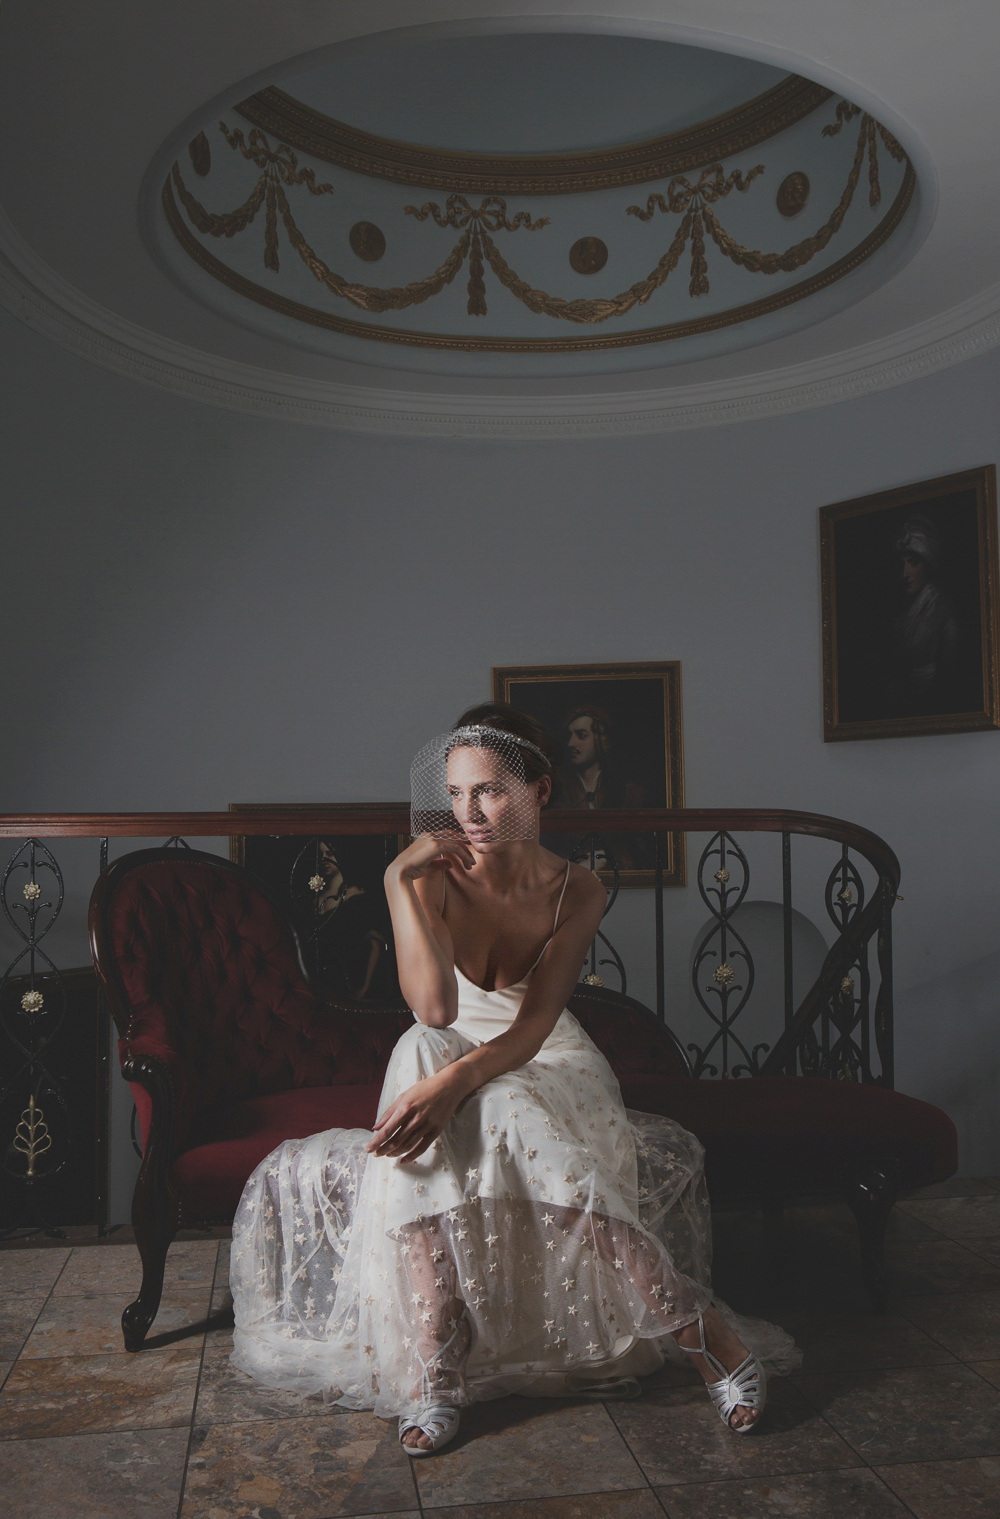 Exquisite, elegant wedding veils by Halfpenny London.